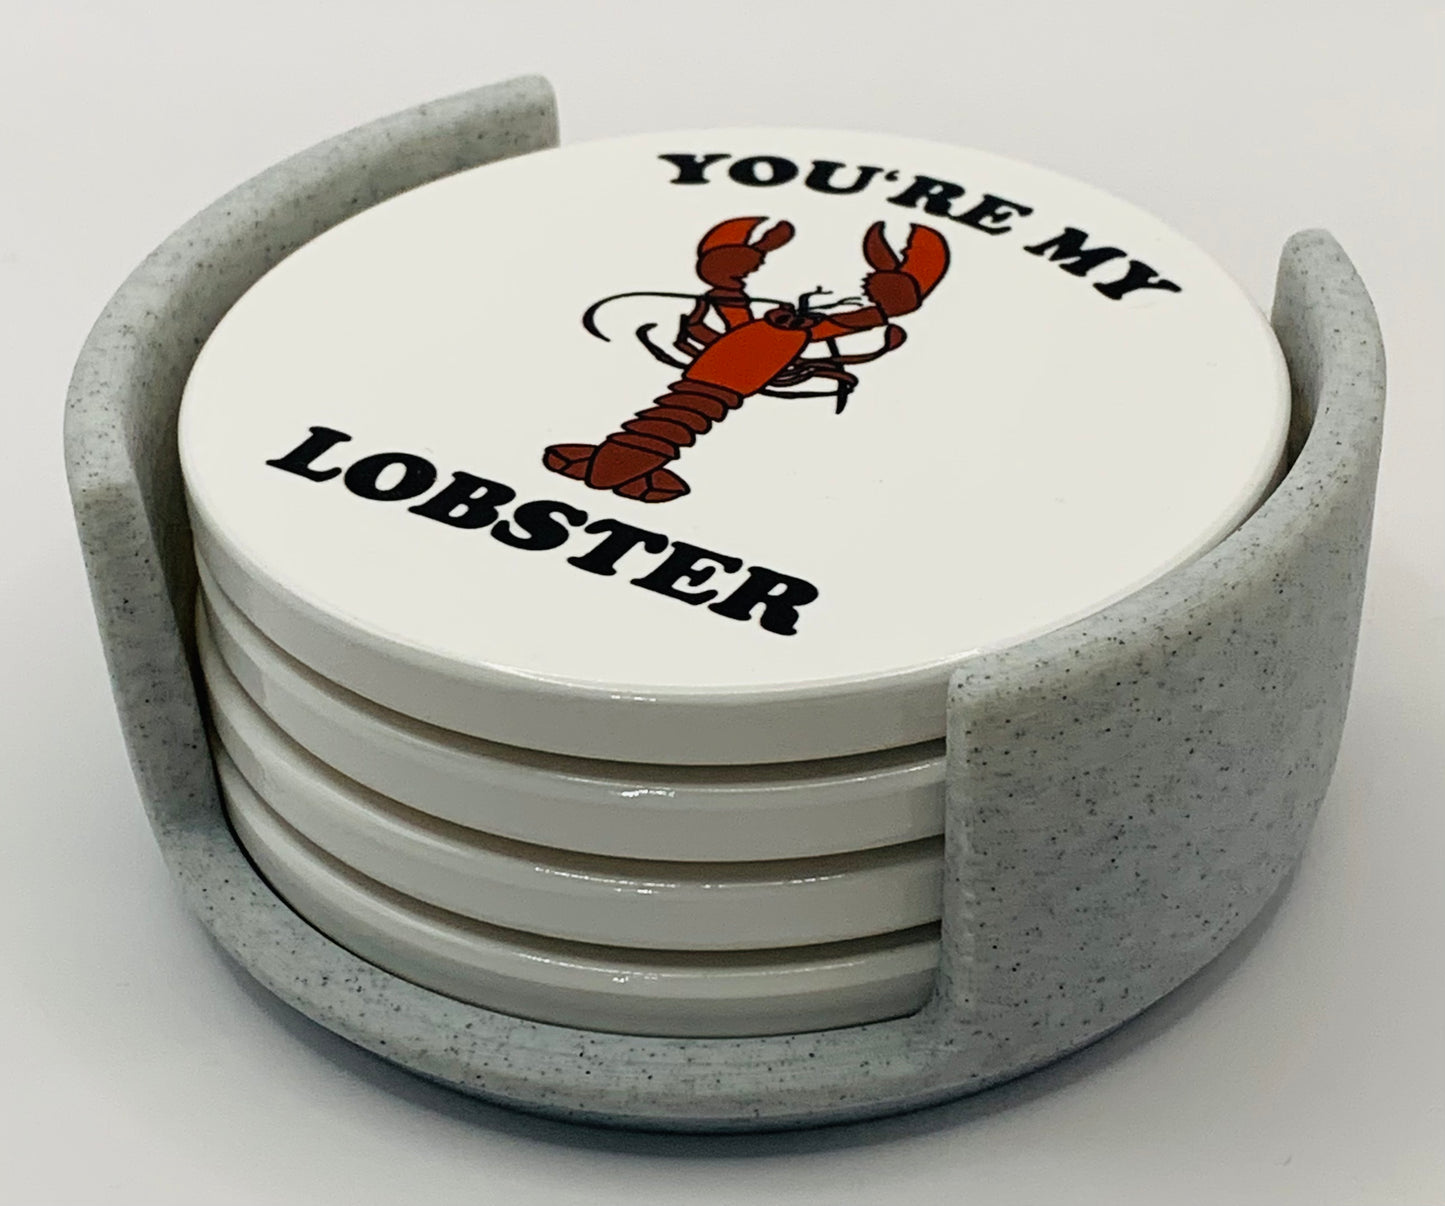 my lobster stone holder